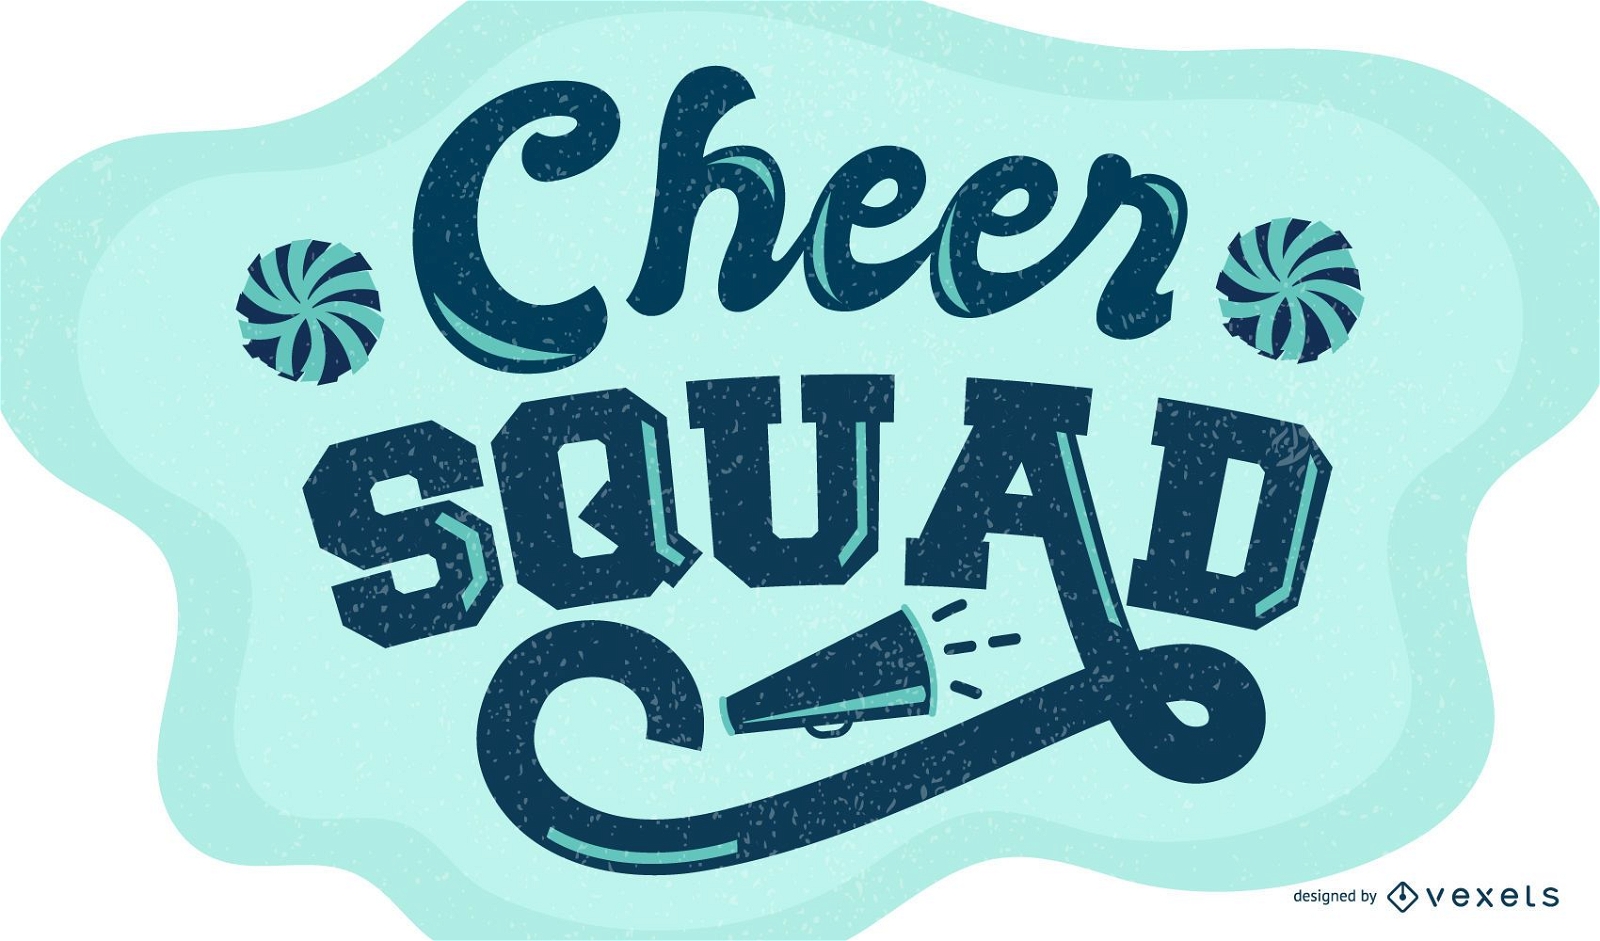 Cheer squad lettering design